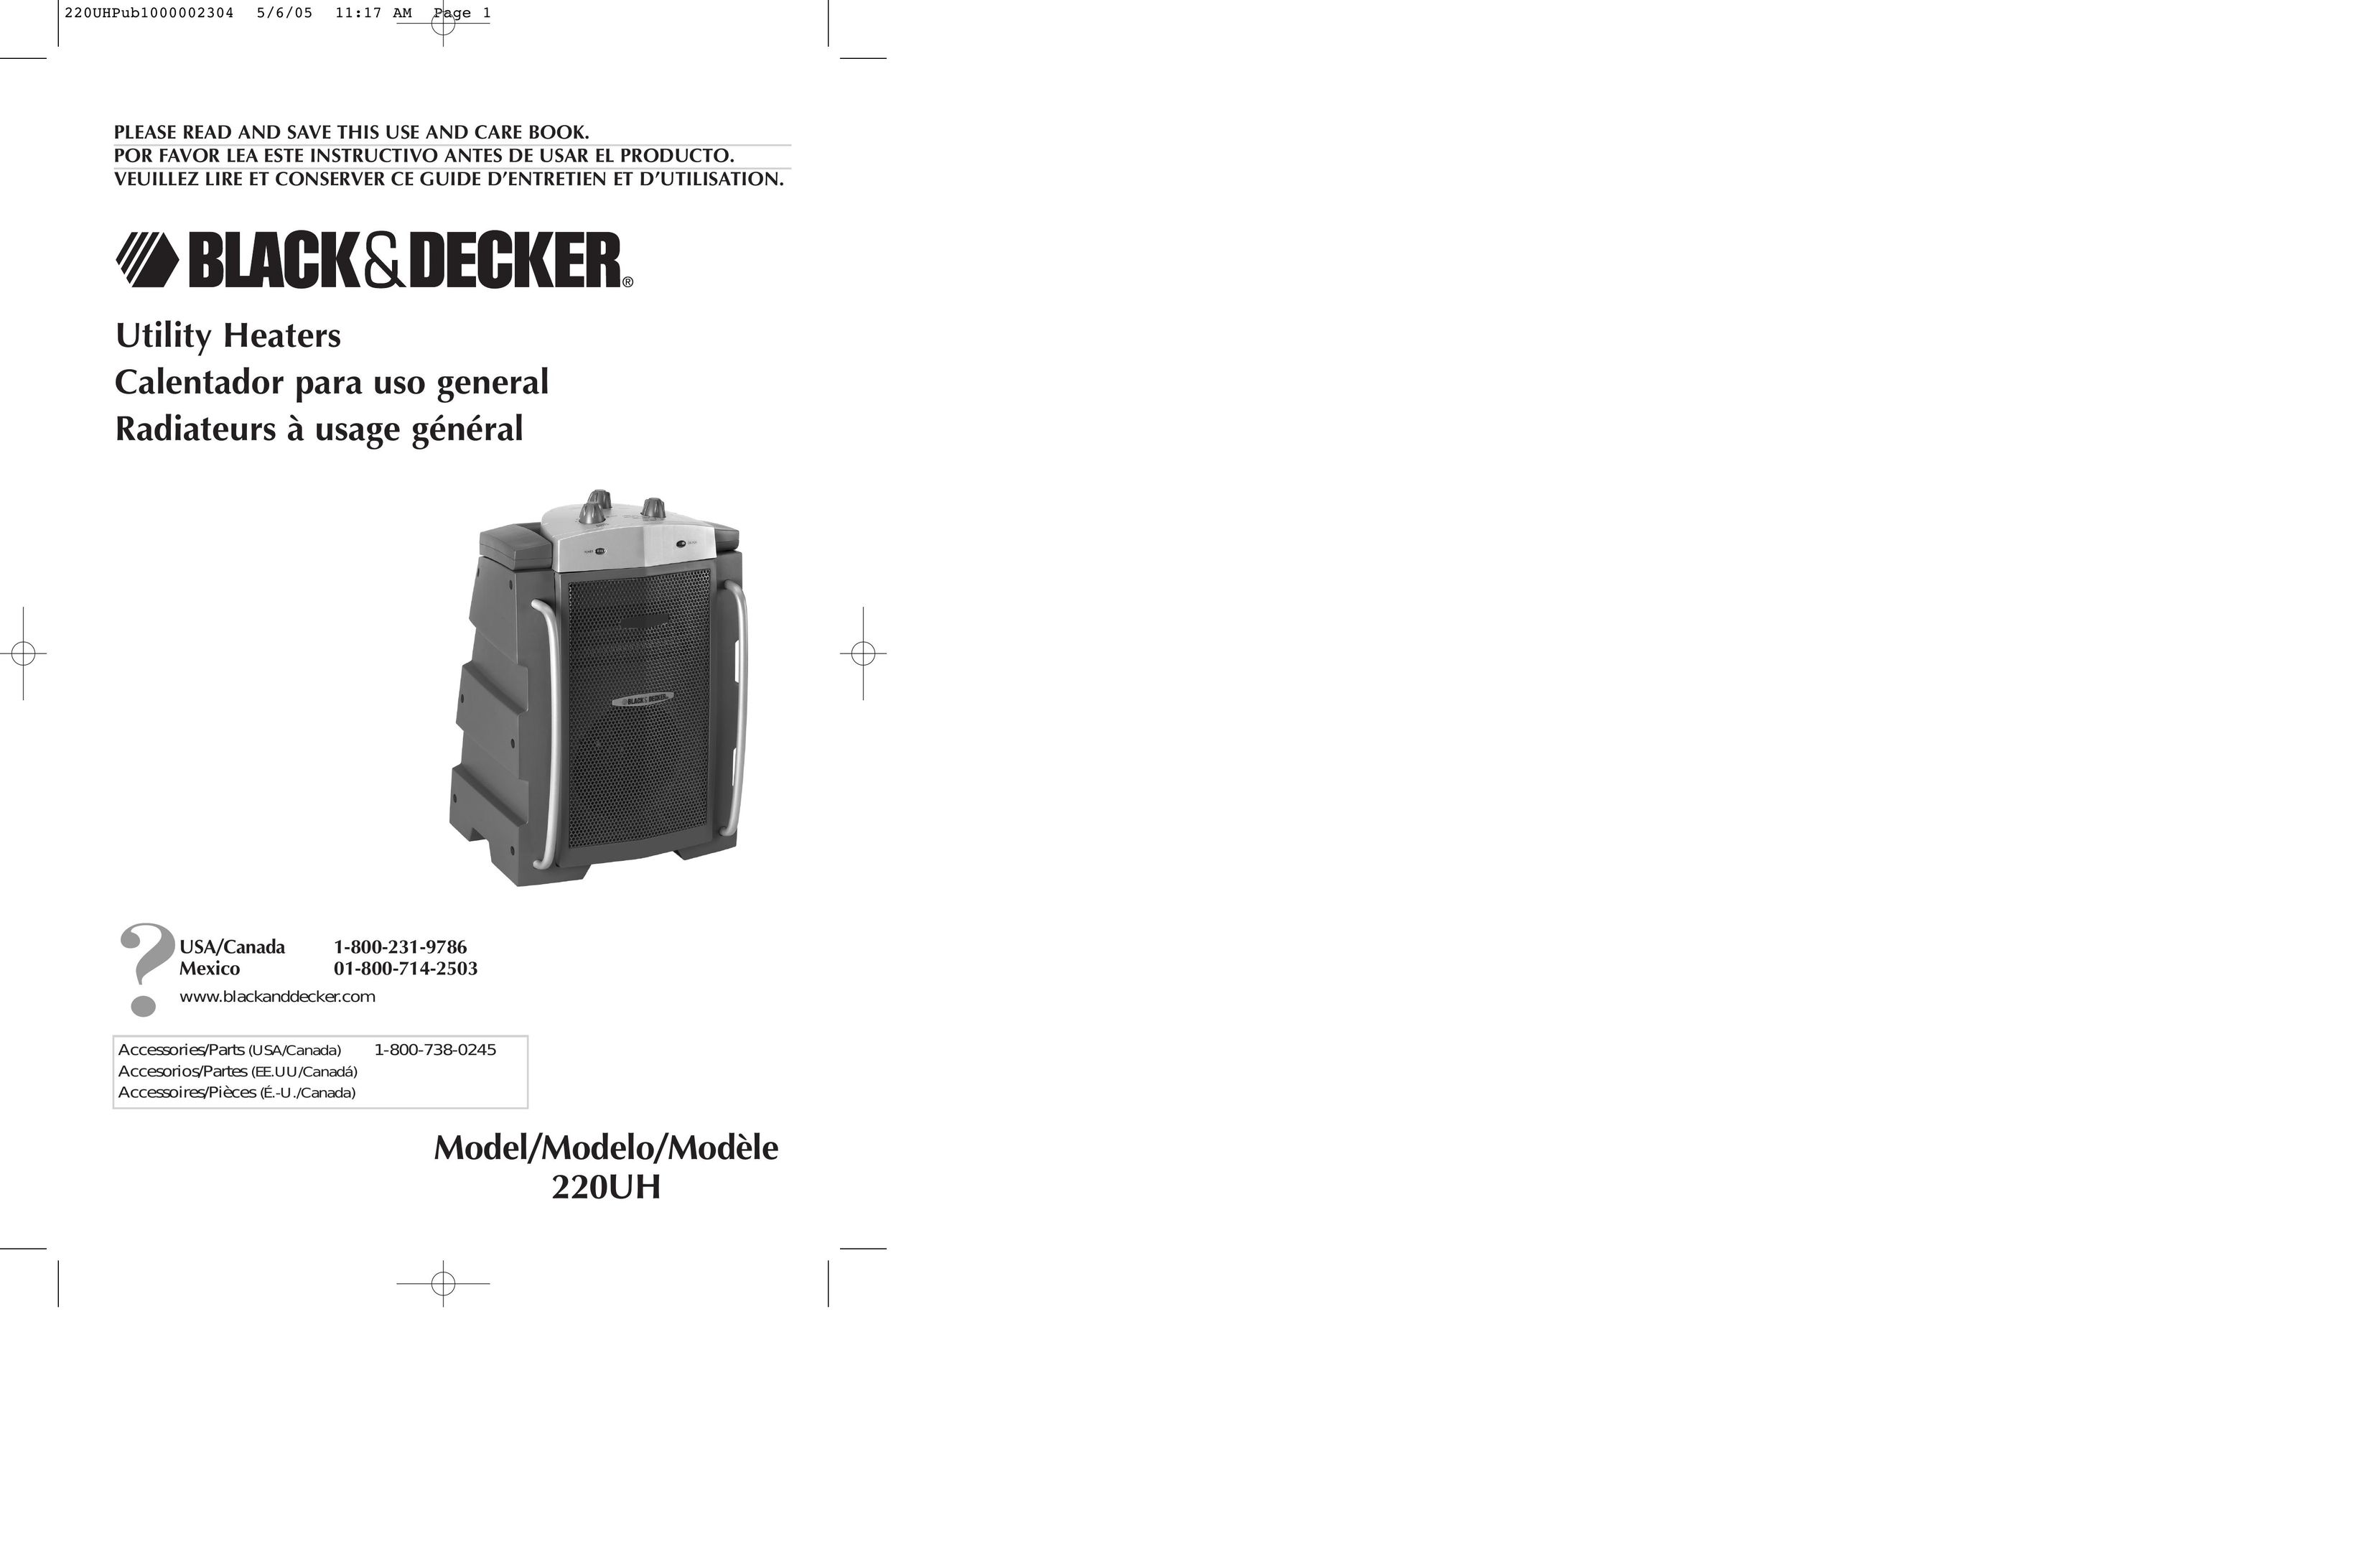 Black & Decker 220UH Electric Heater User Manual